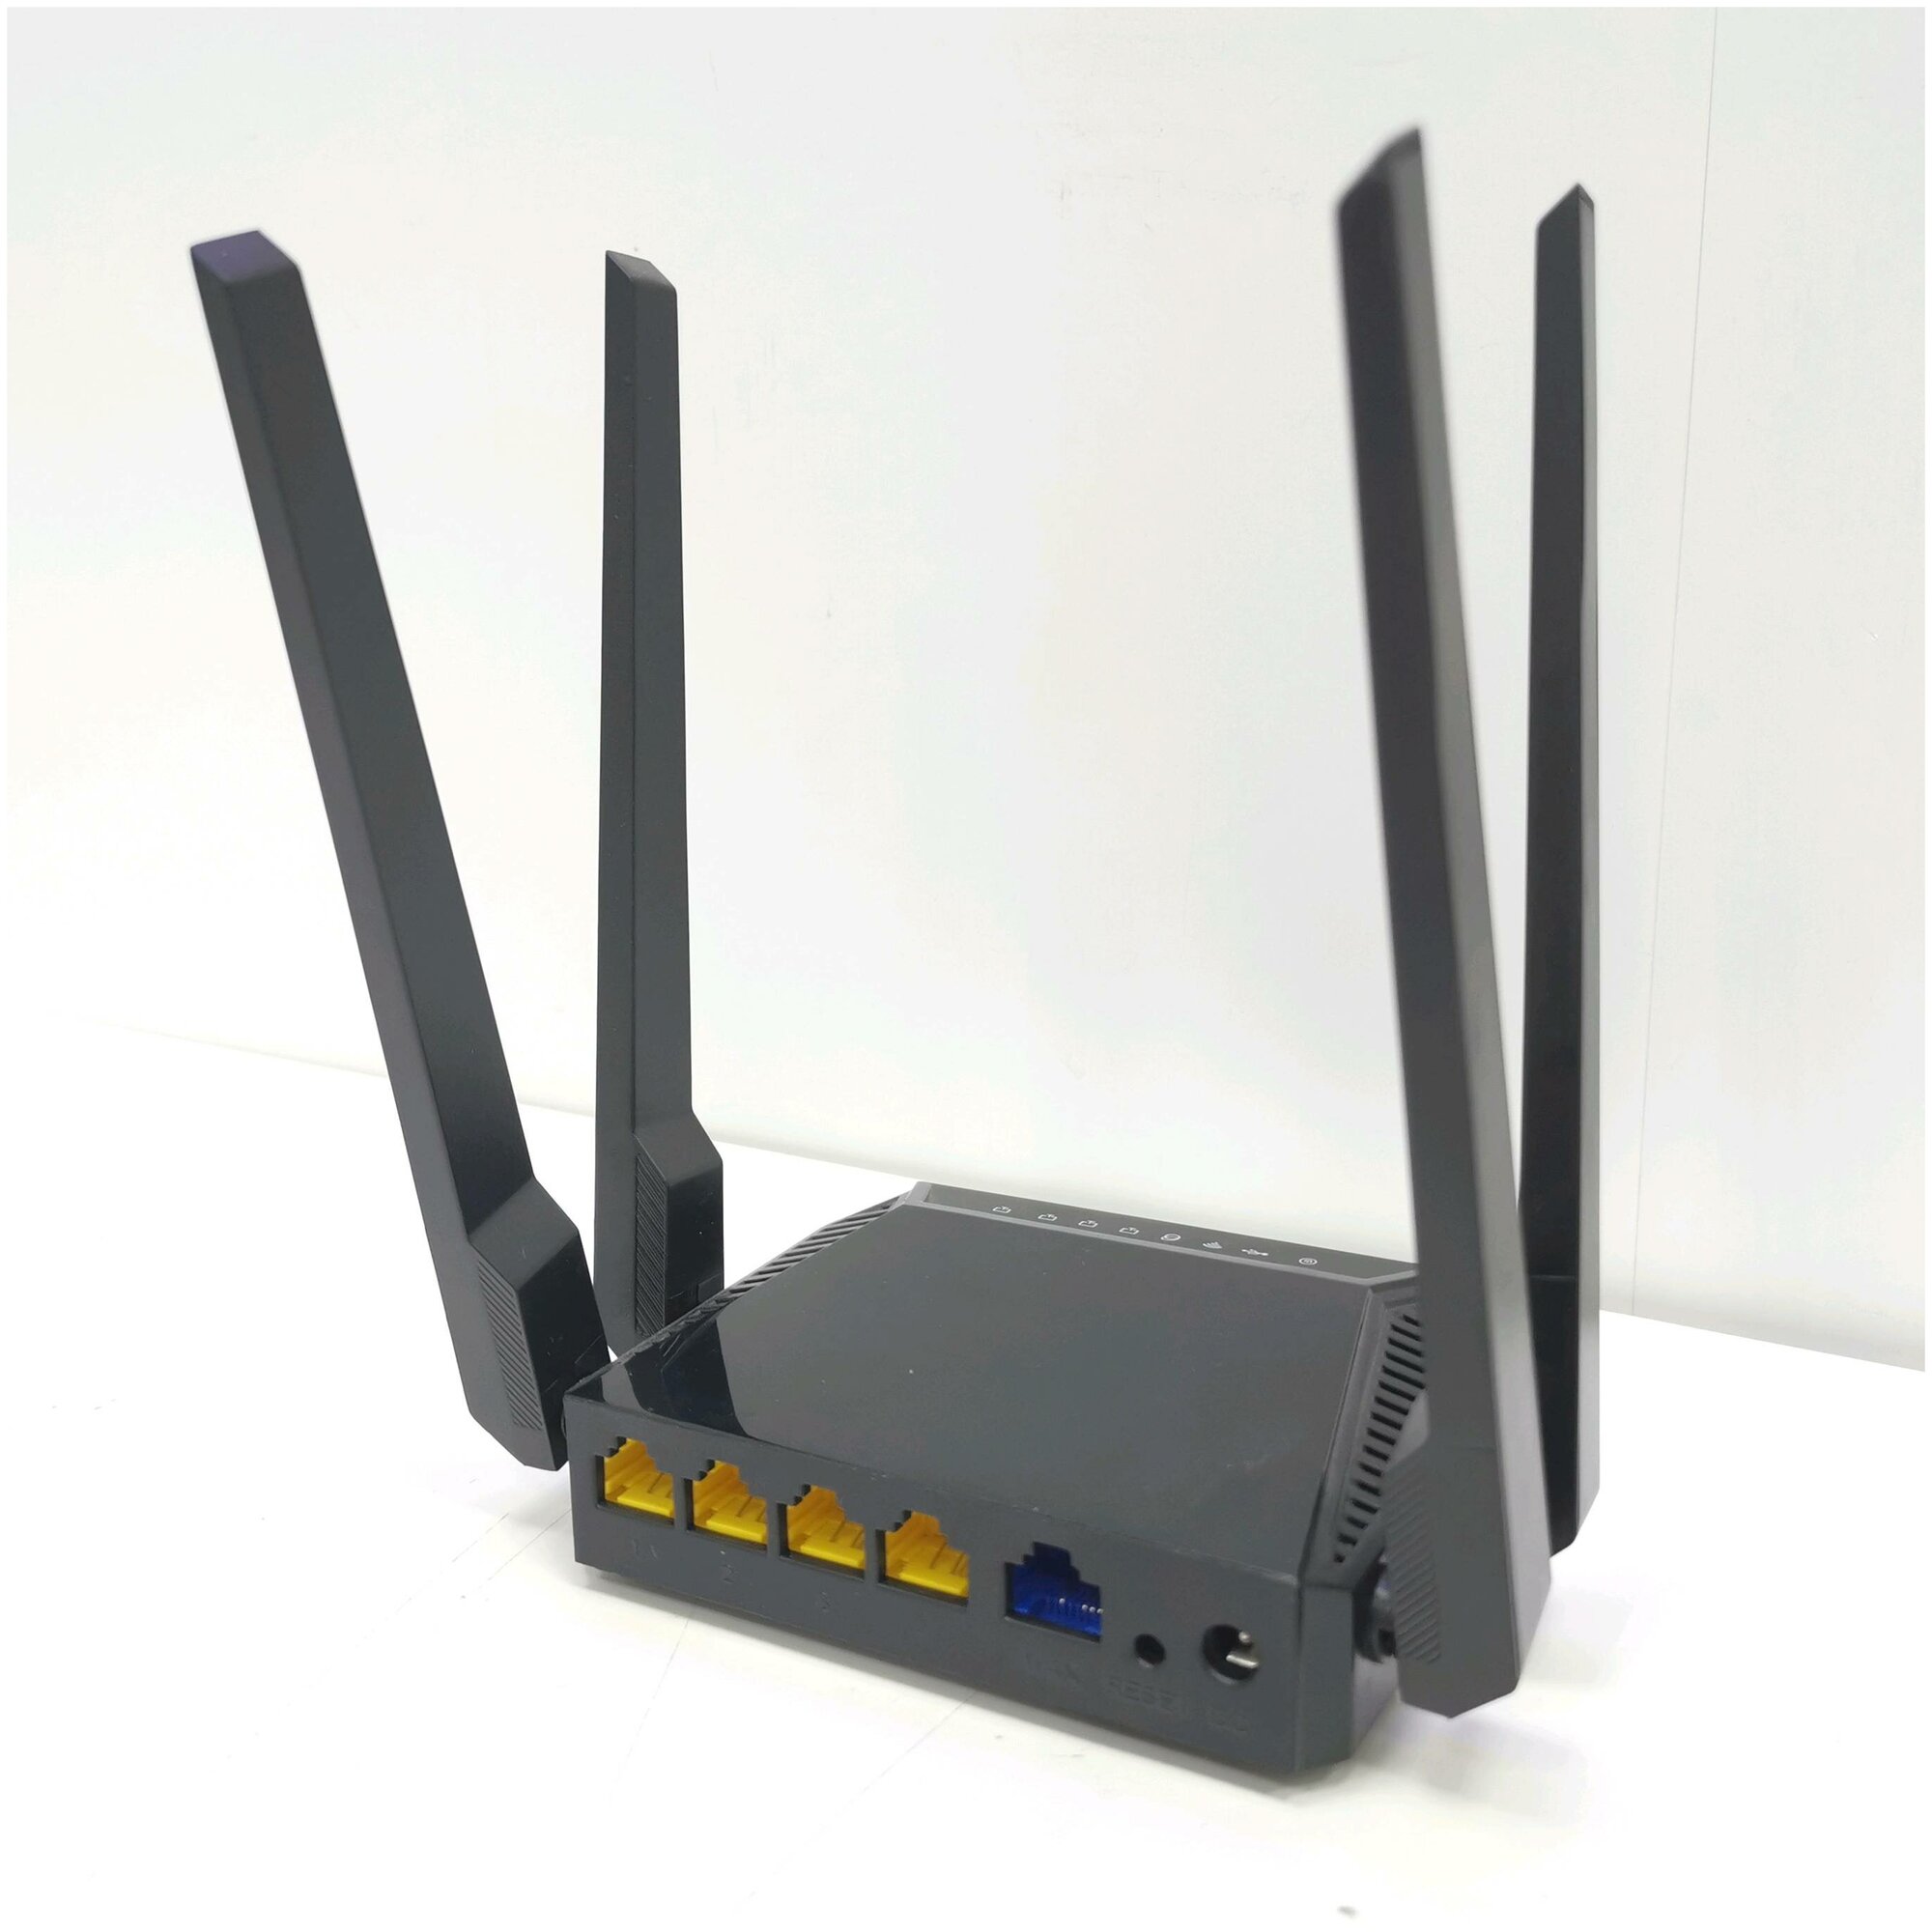 WiFi Роутер для USB 4G LTE модема ZBT 3826 WE3826 PRO 300Мб\сек как Zyxel для Huawei и ZTE